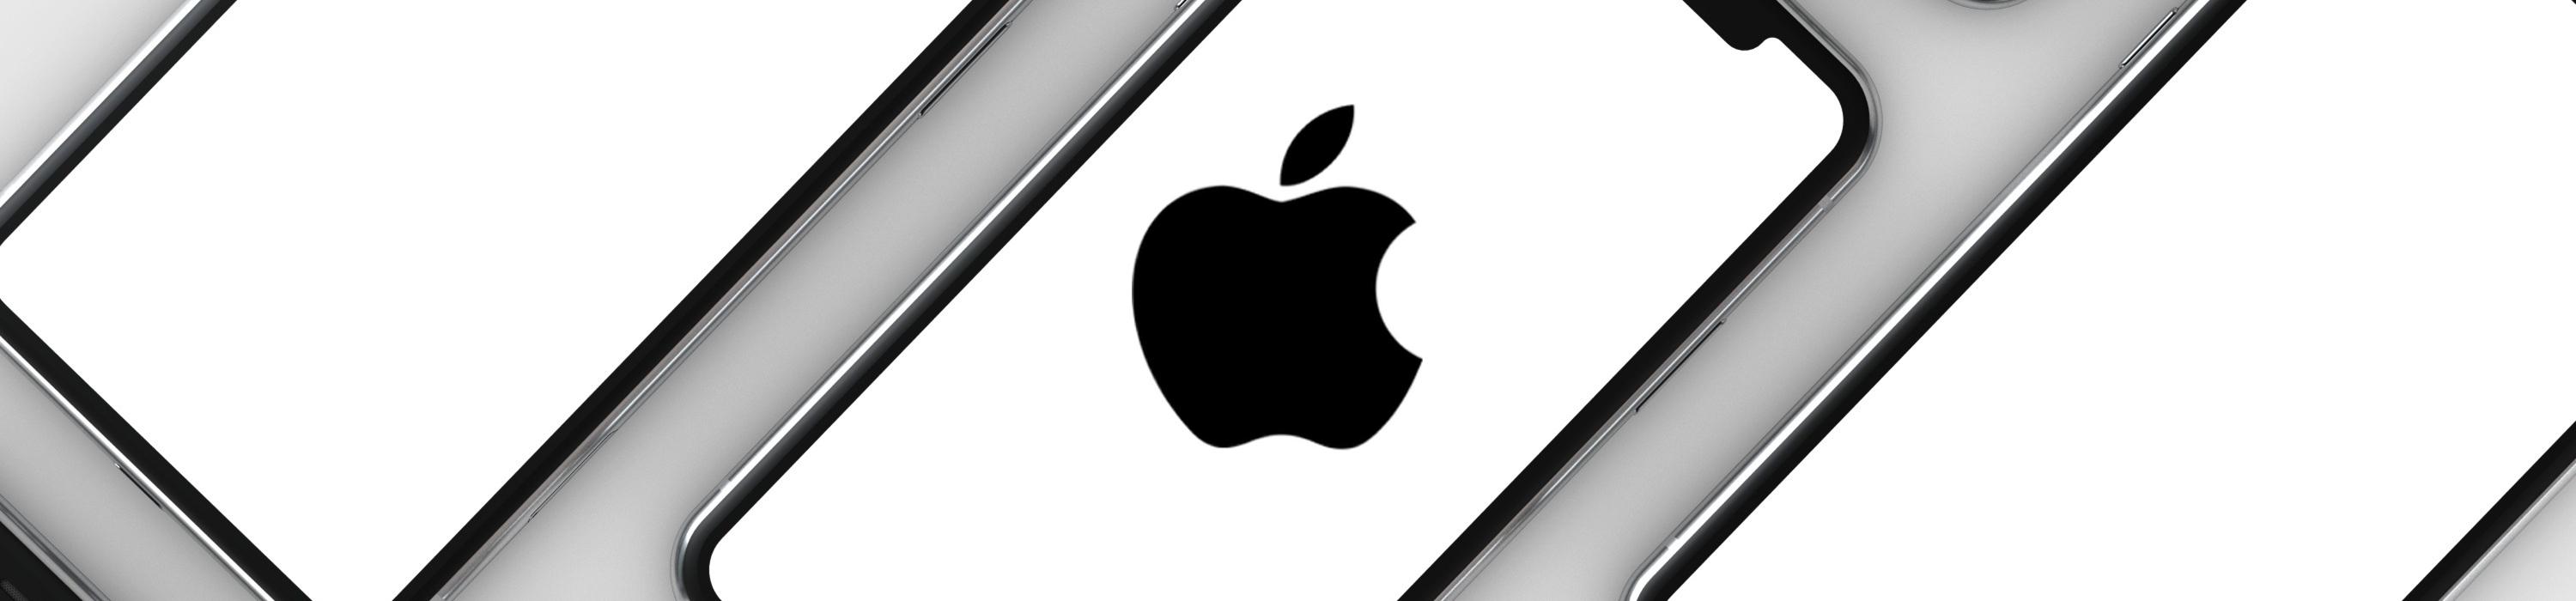 apple iphone header image